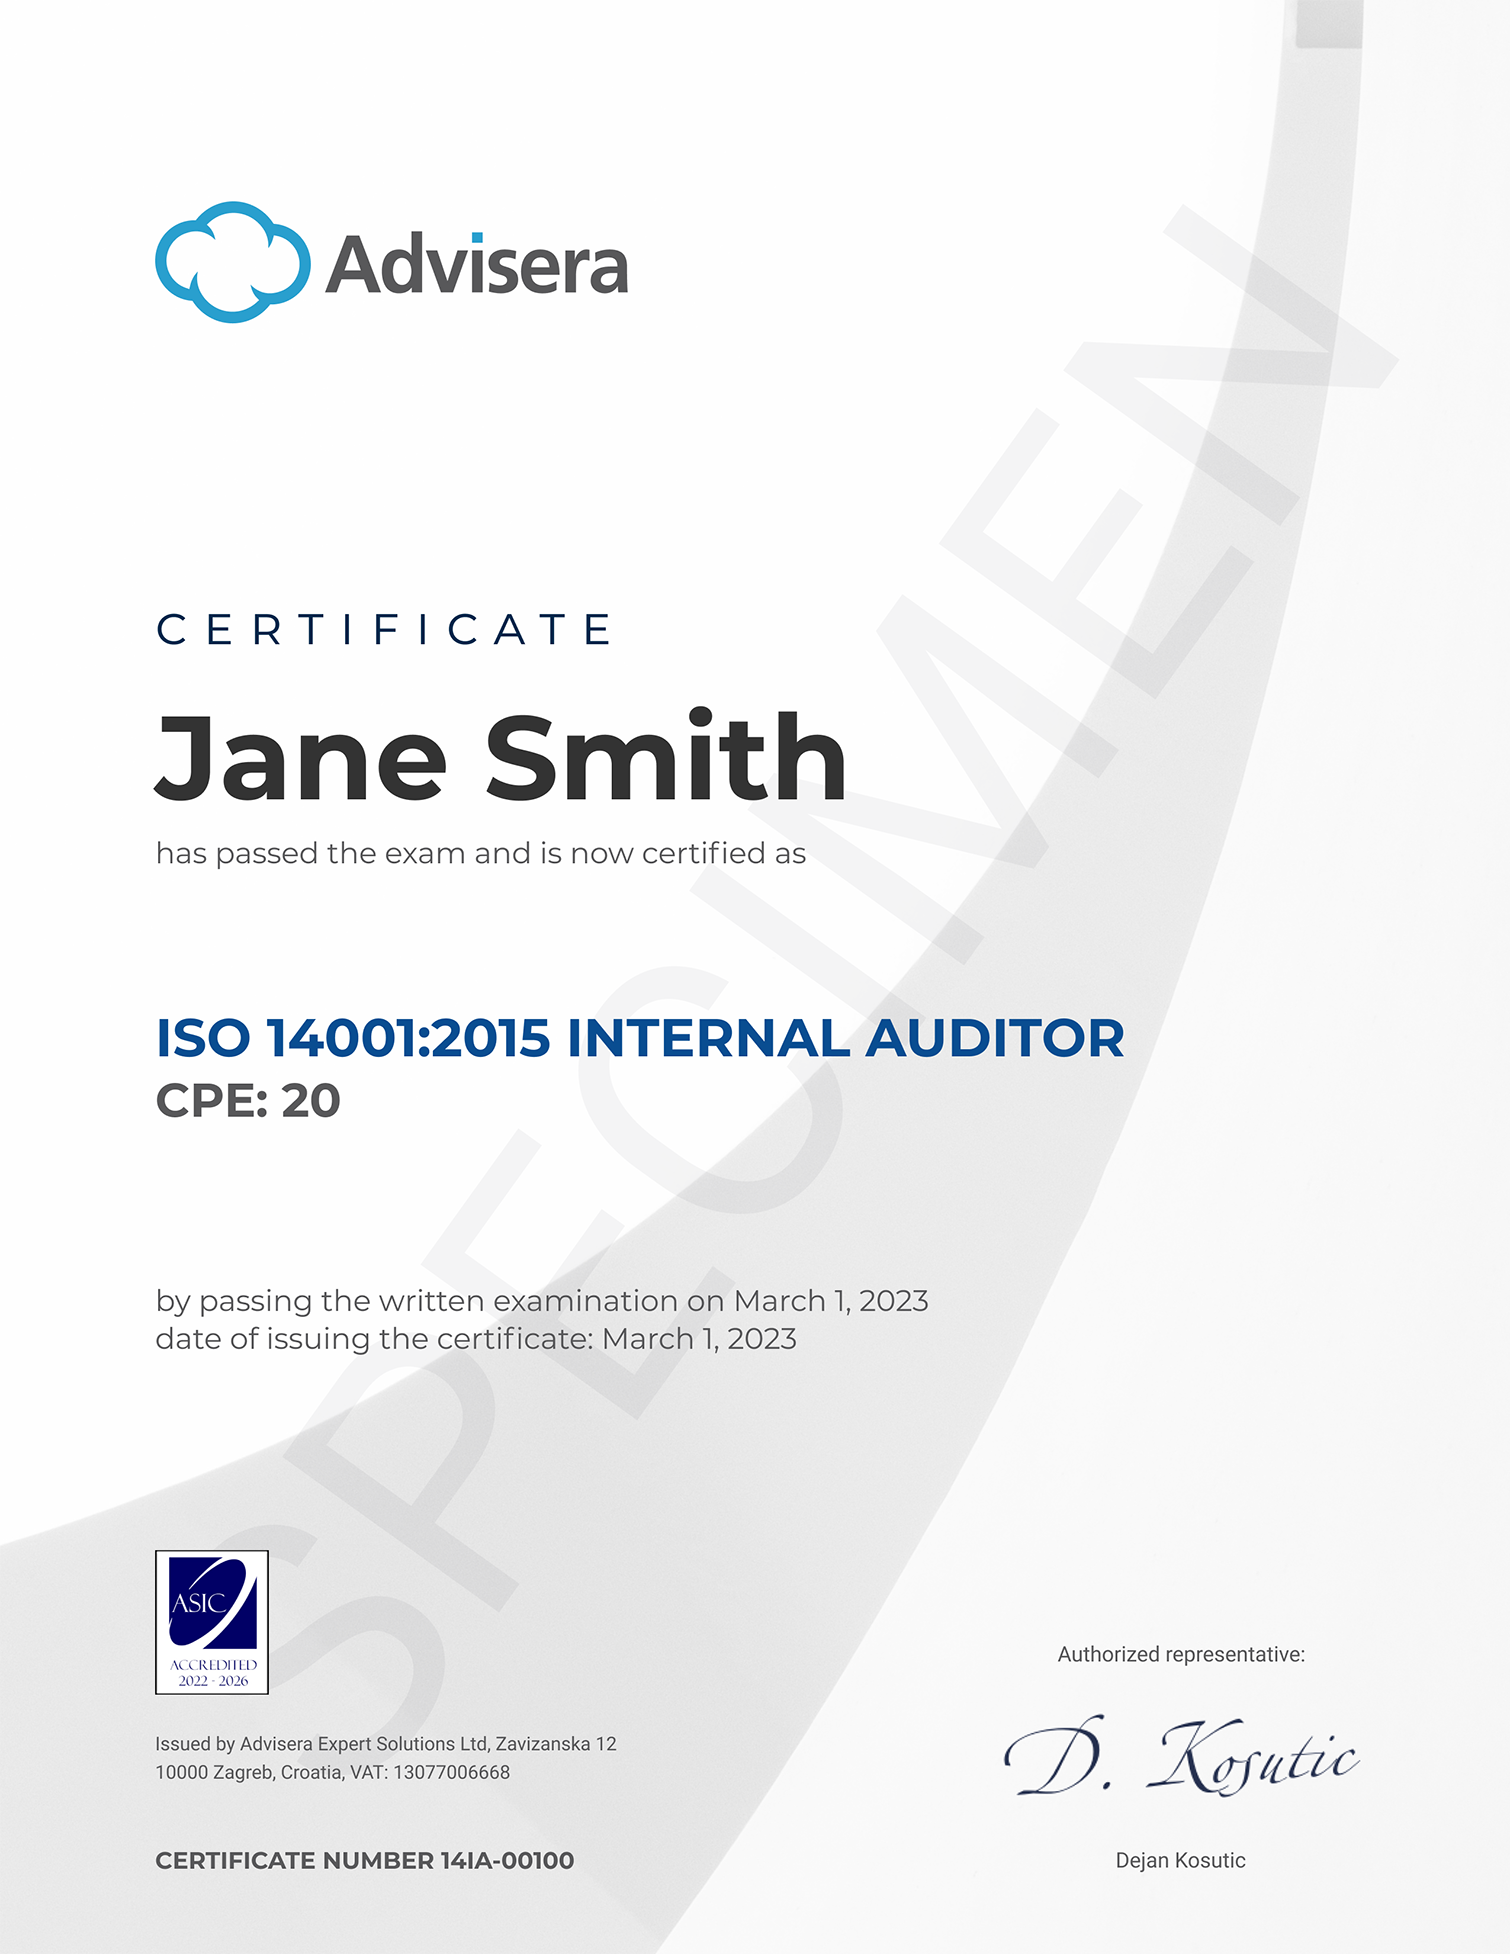 Curso de Auditor Interno ISO 14001 - Advisera